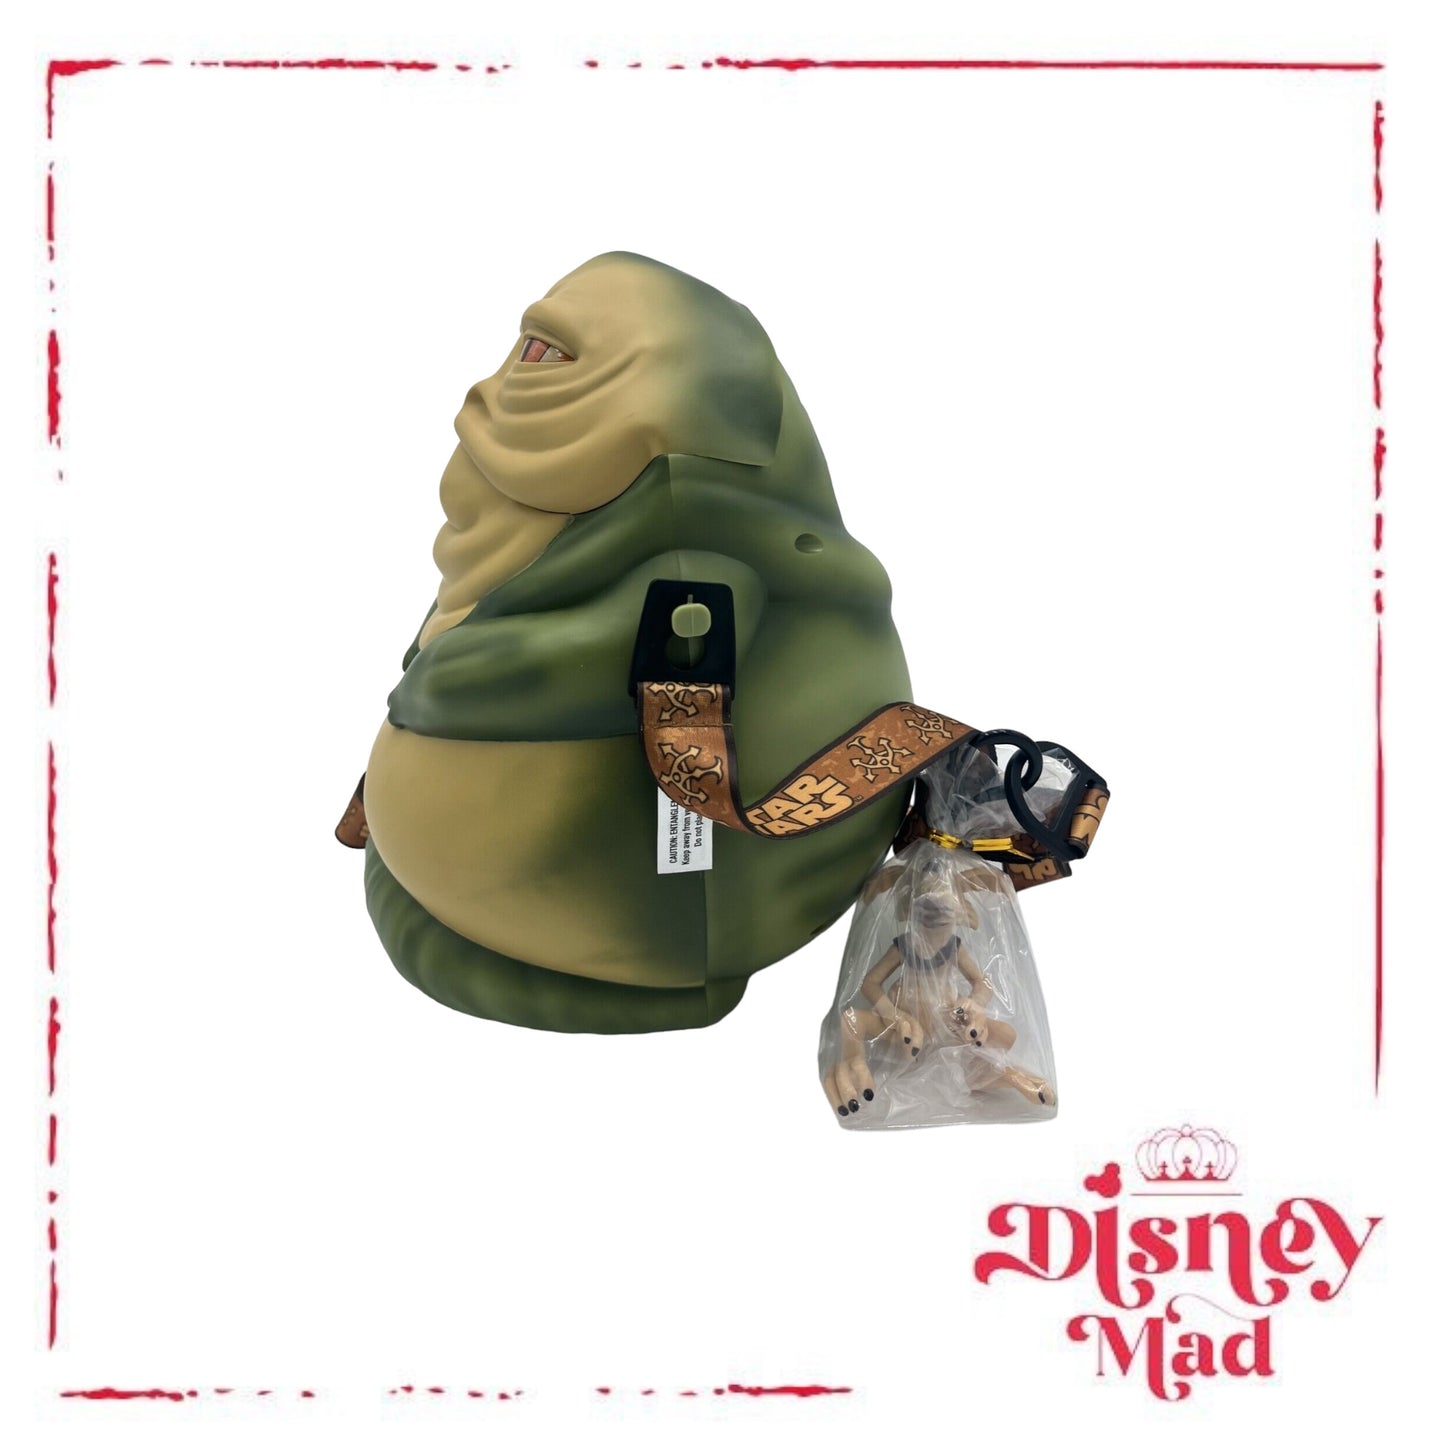 Jabba The Hutt Disneyland Star wars Popcorn Bucket With Sound - Disney Parks